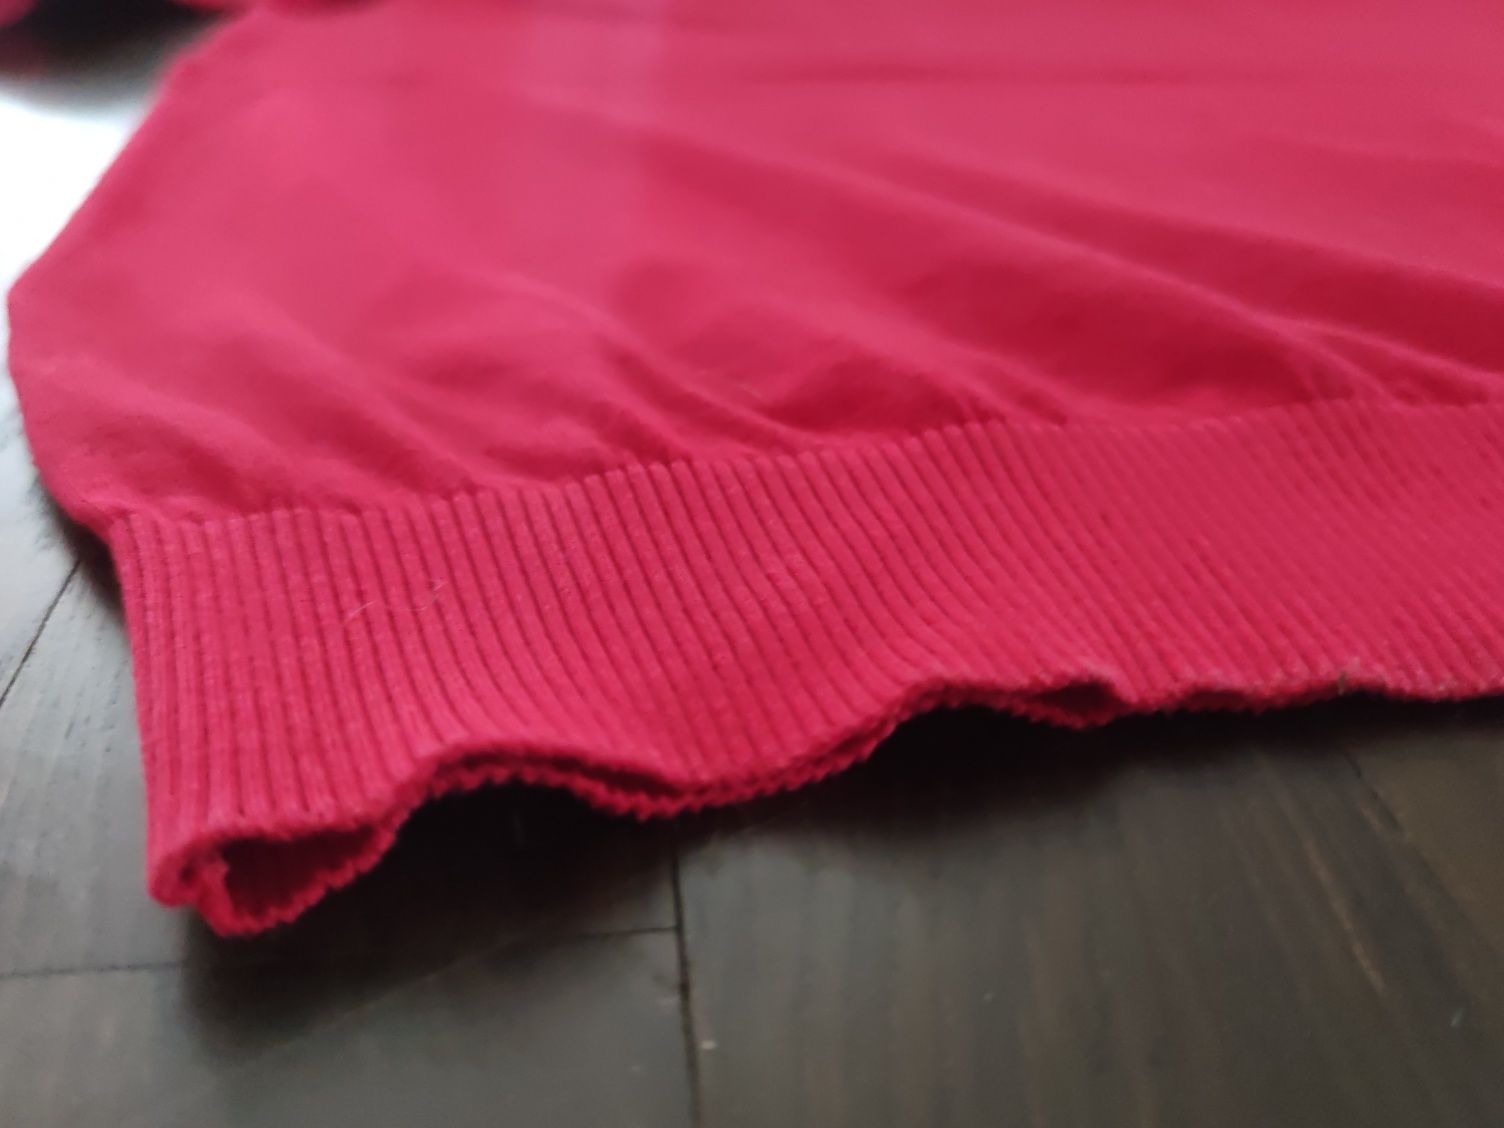 Malinowo czerwony sweter Vistula bawełna